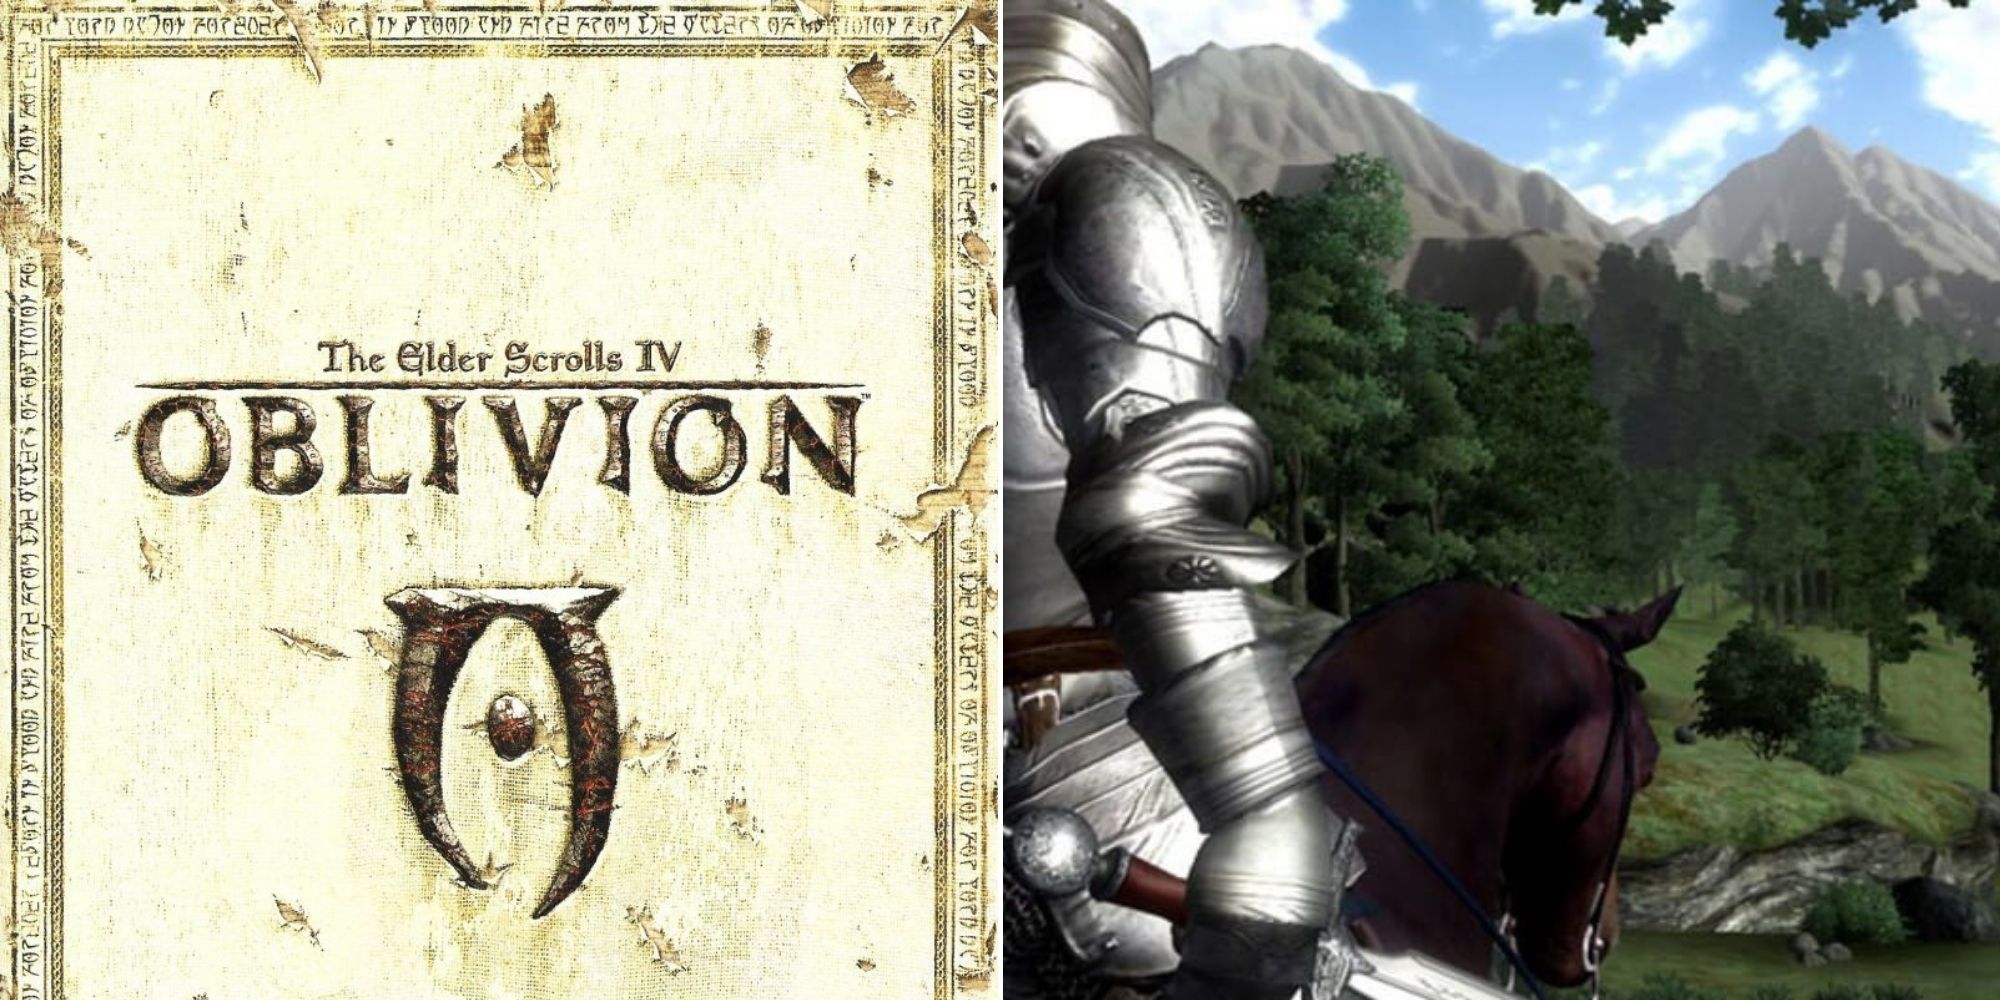 The Elder Scrolls 4 Oblivion Cover Art - A player riding a horse through a forest 